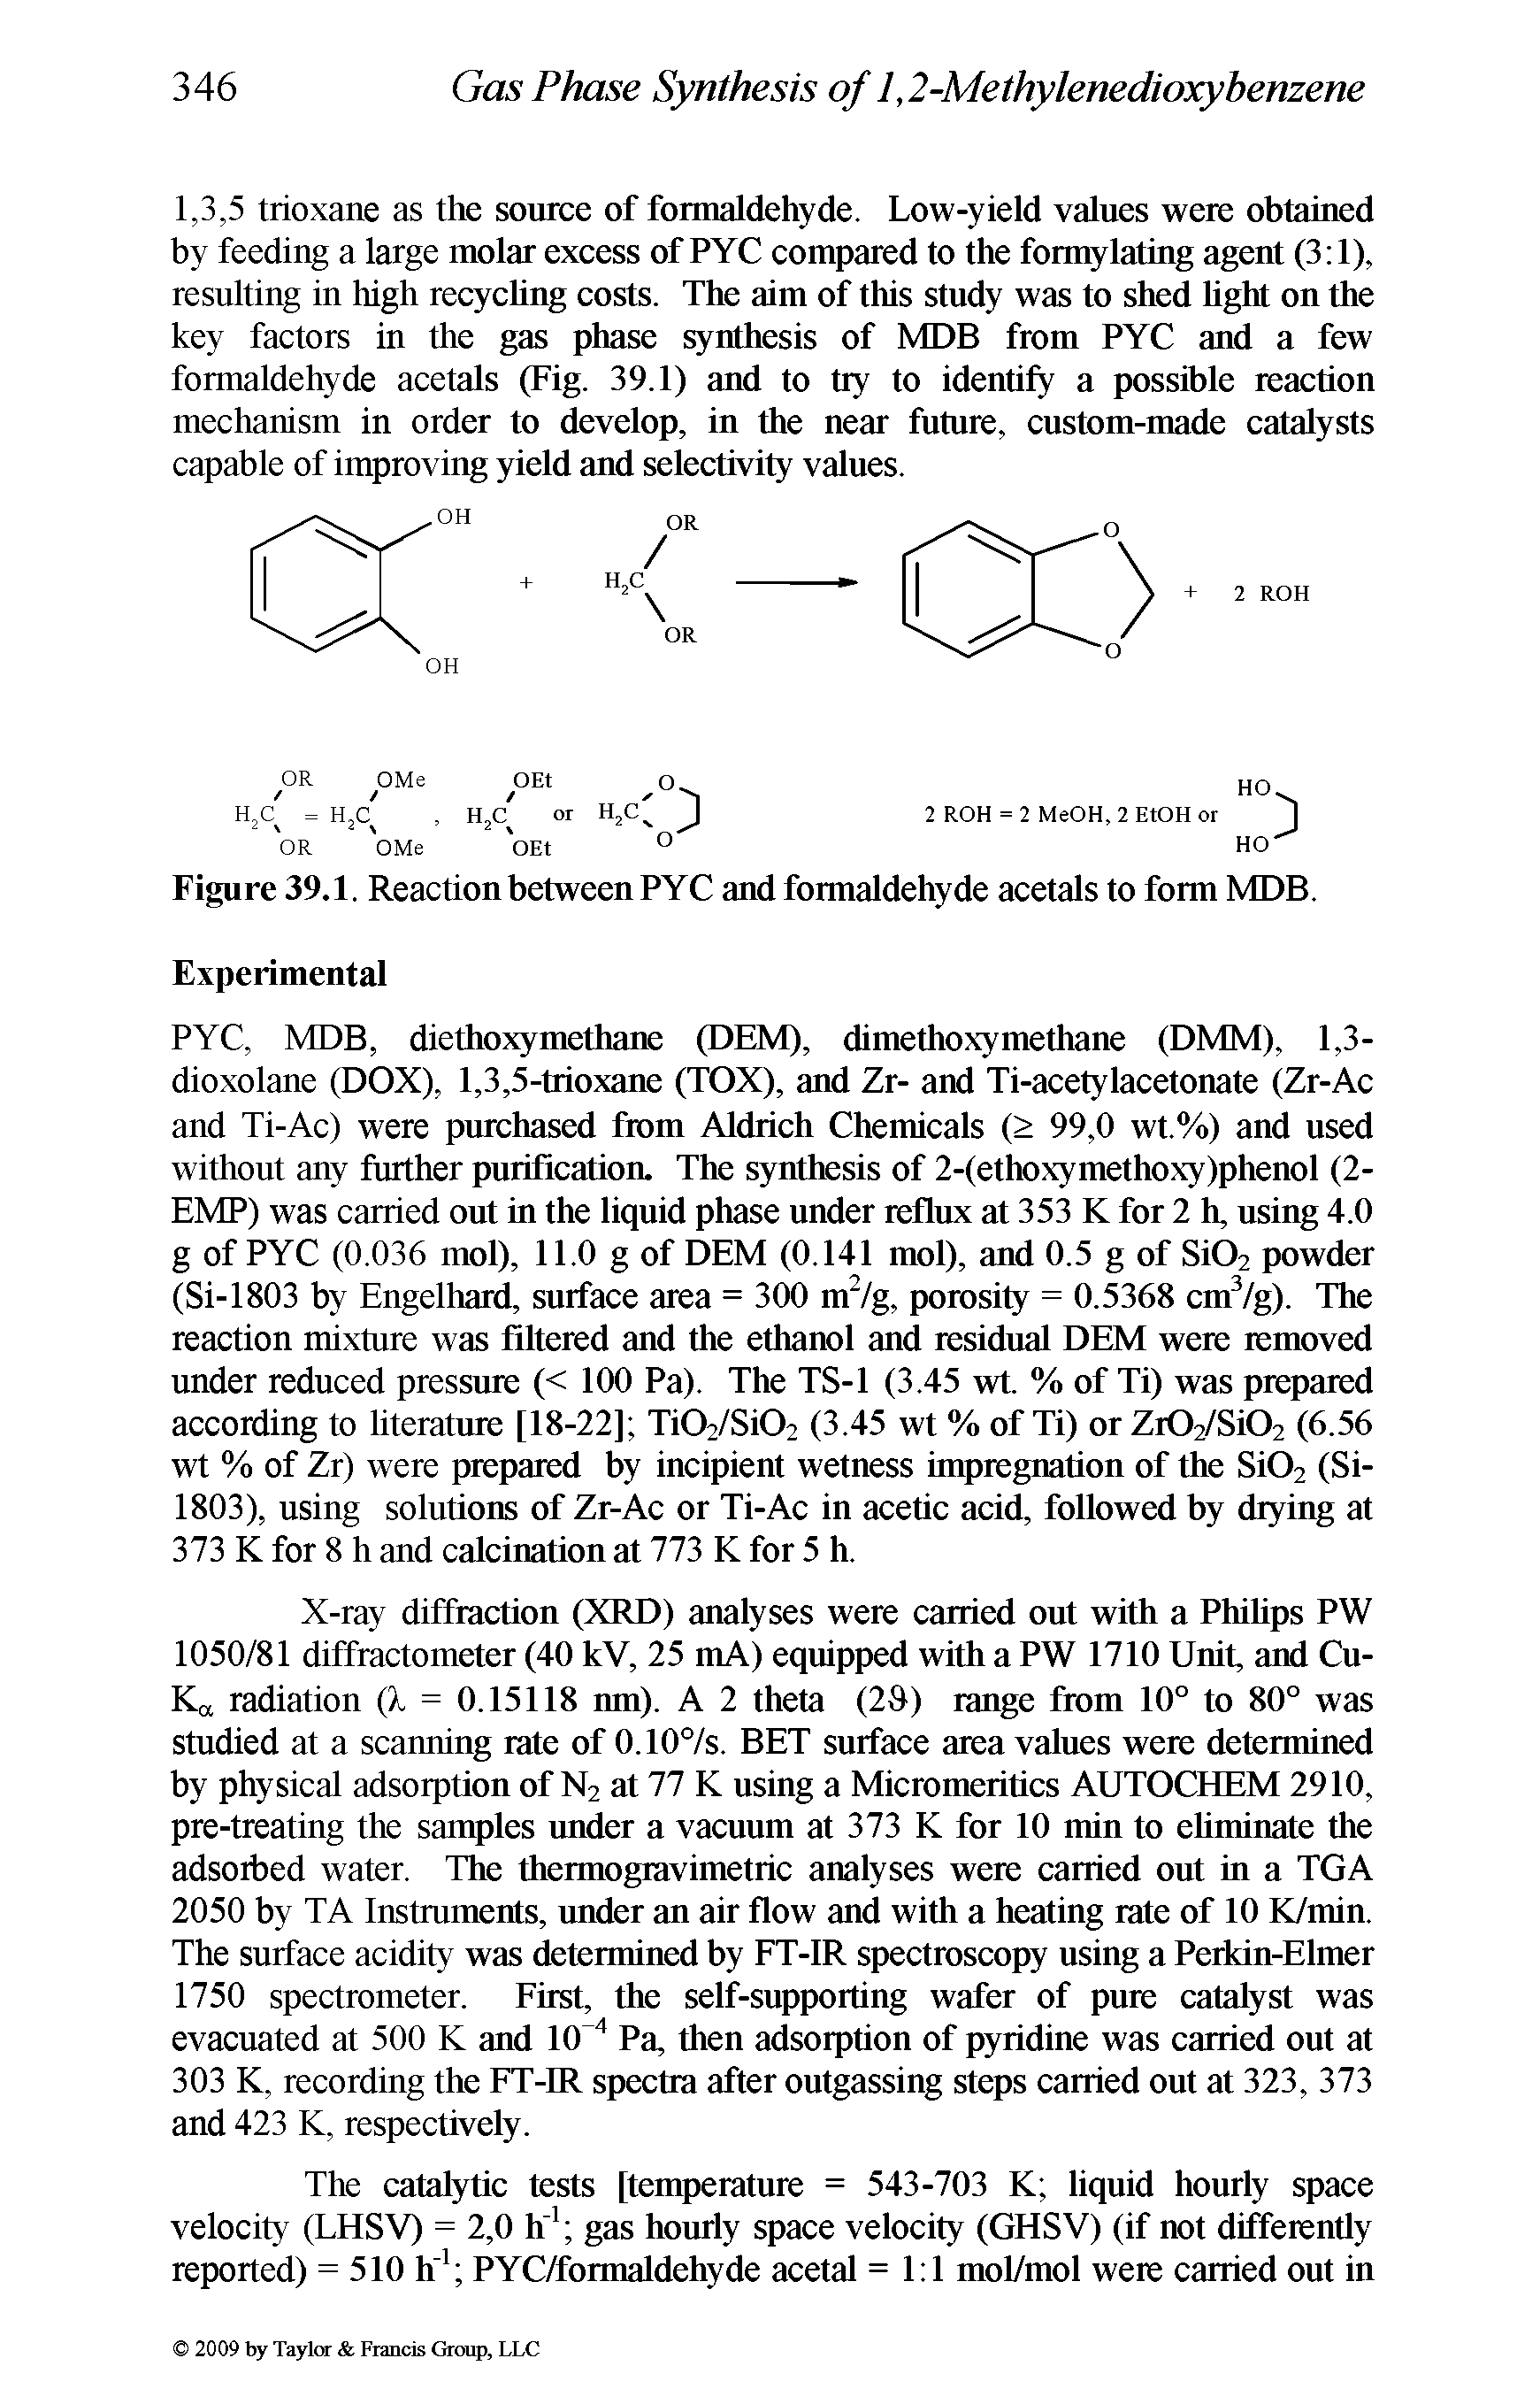 Figure 39.1. Reaction between PYC and formaldehyde acetals to form MDB. Experimental...